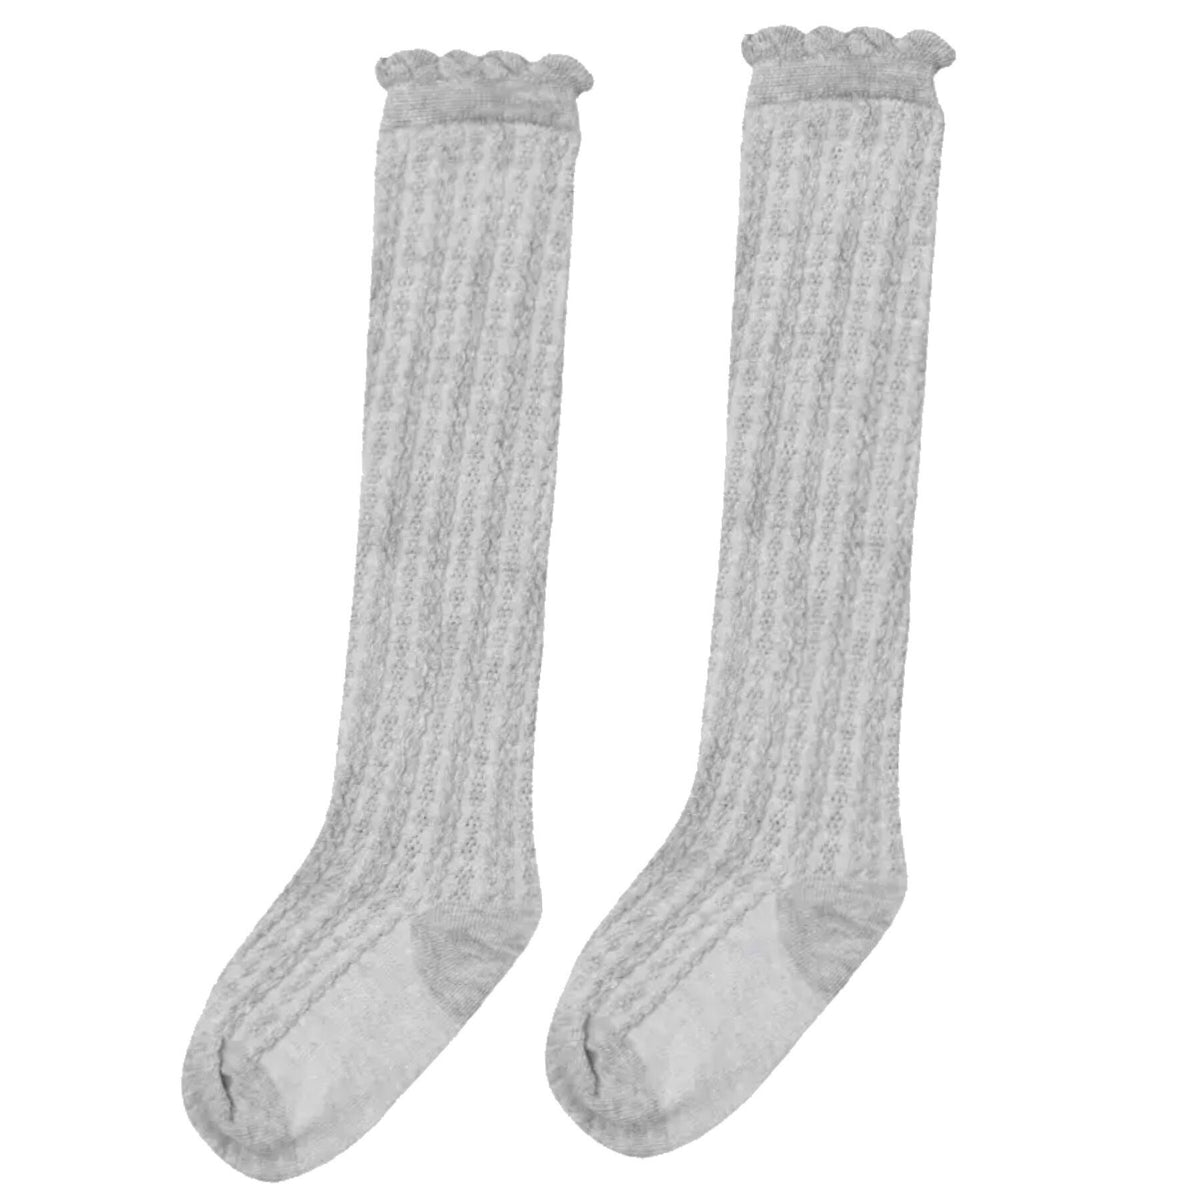 Ribbed Knee High Socks - Gray